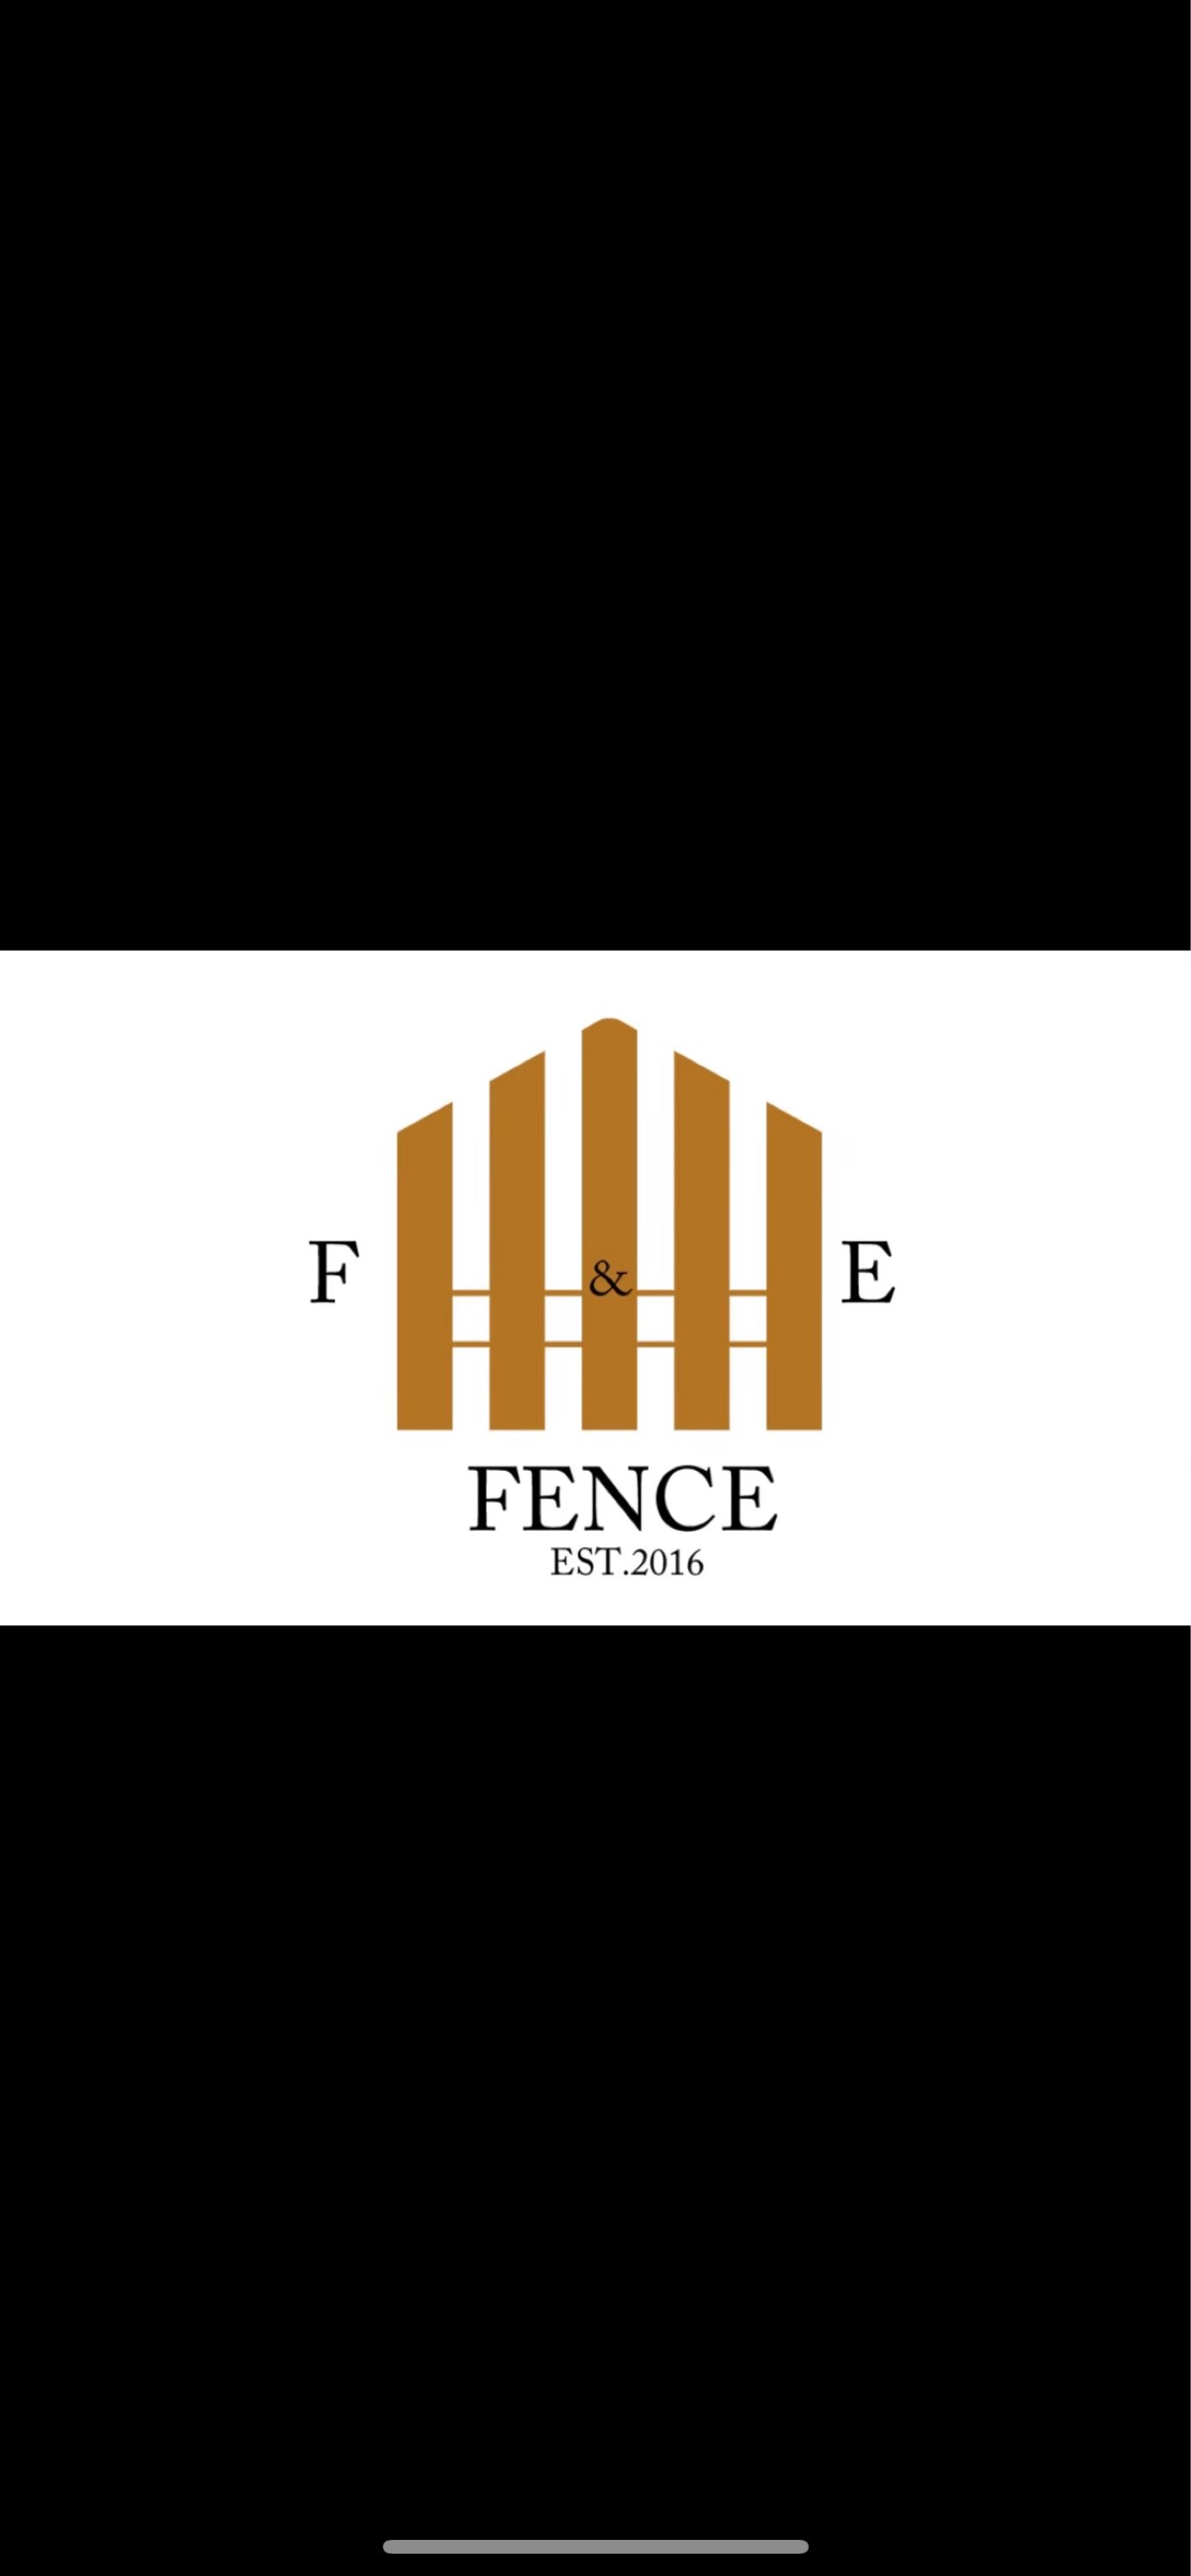 F & E FENCE LLC Logo